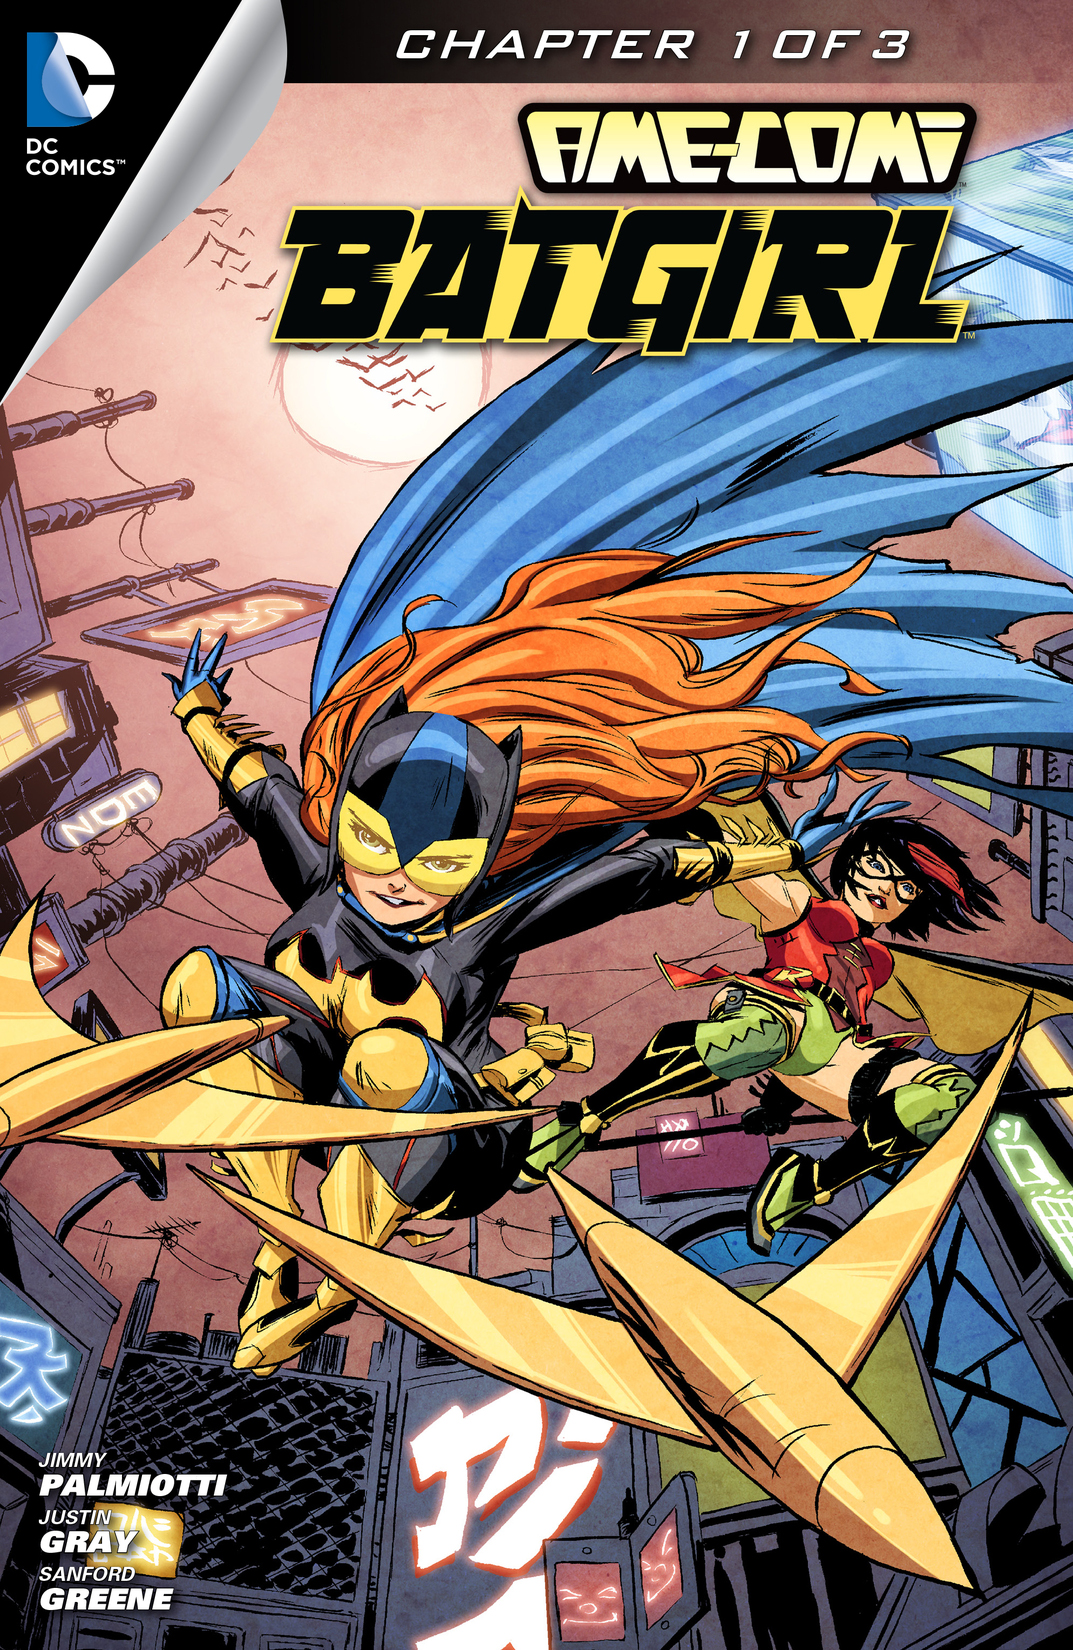 Ame-Comi II: Batgirl #1 preview images